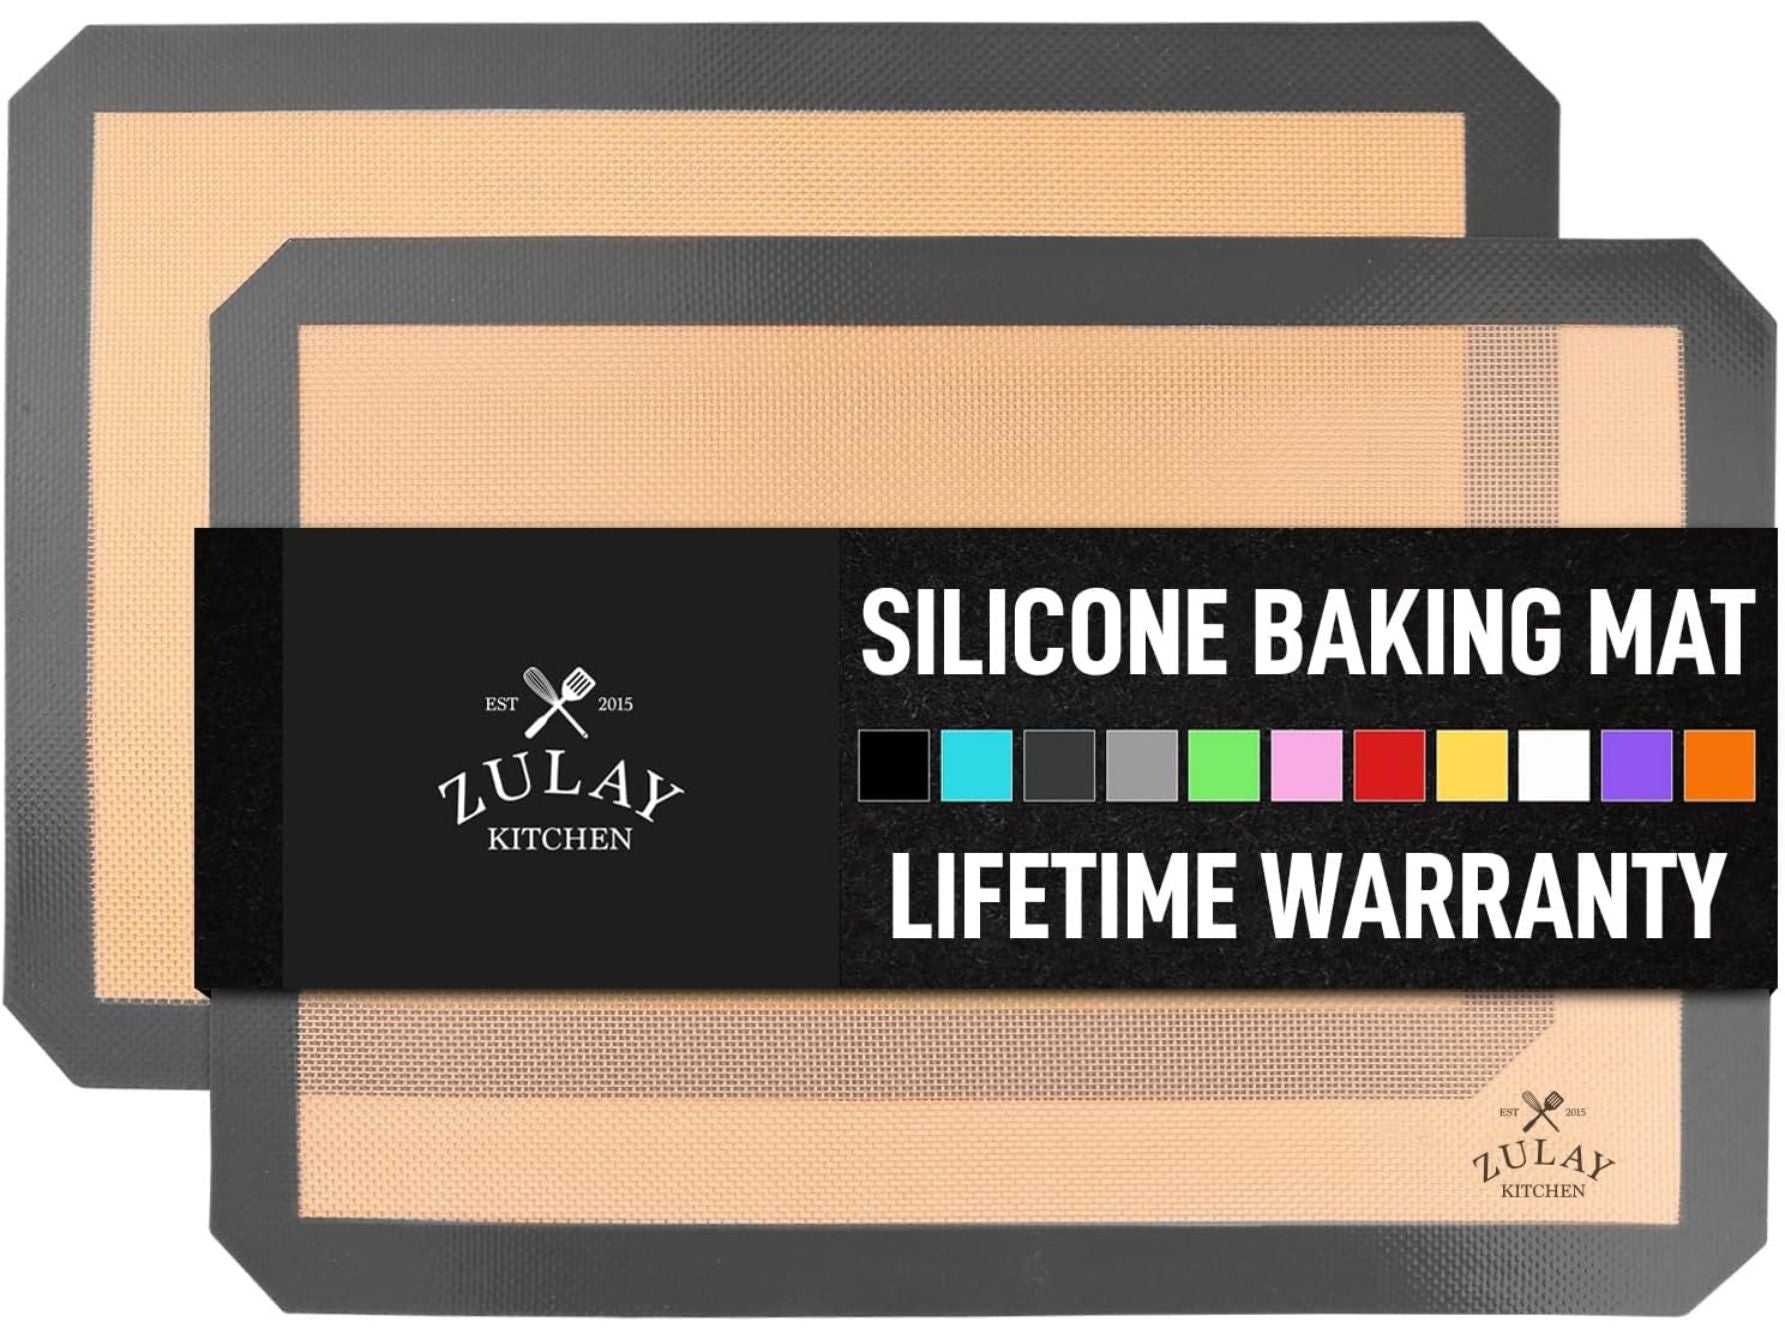 Aluminum Baking Pan - 10 x 13 x 1, Quarter Sheet - ULINE - Qty of 12 - H-10793